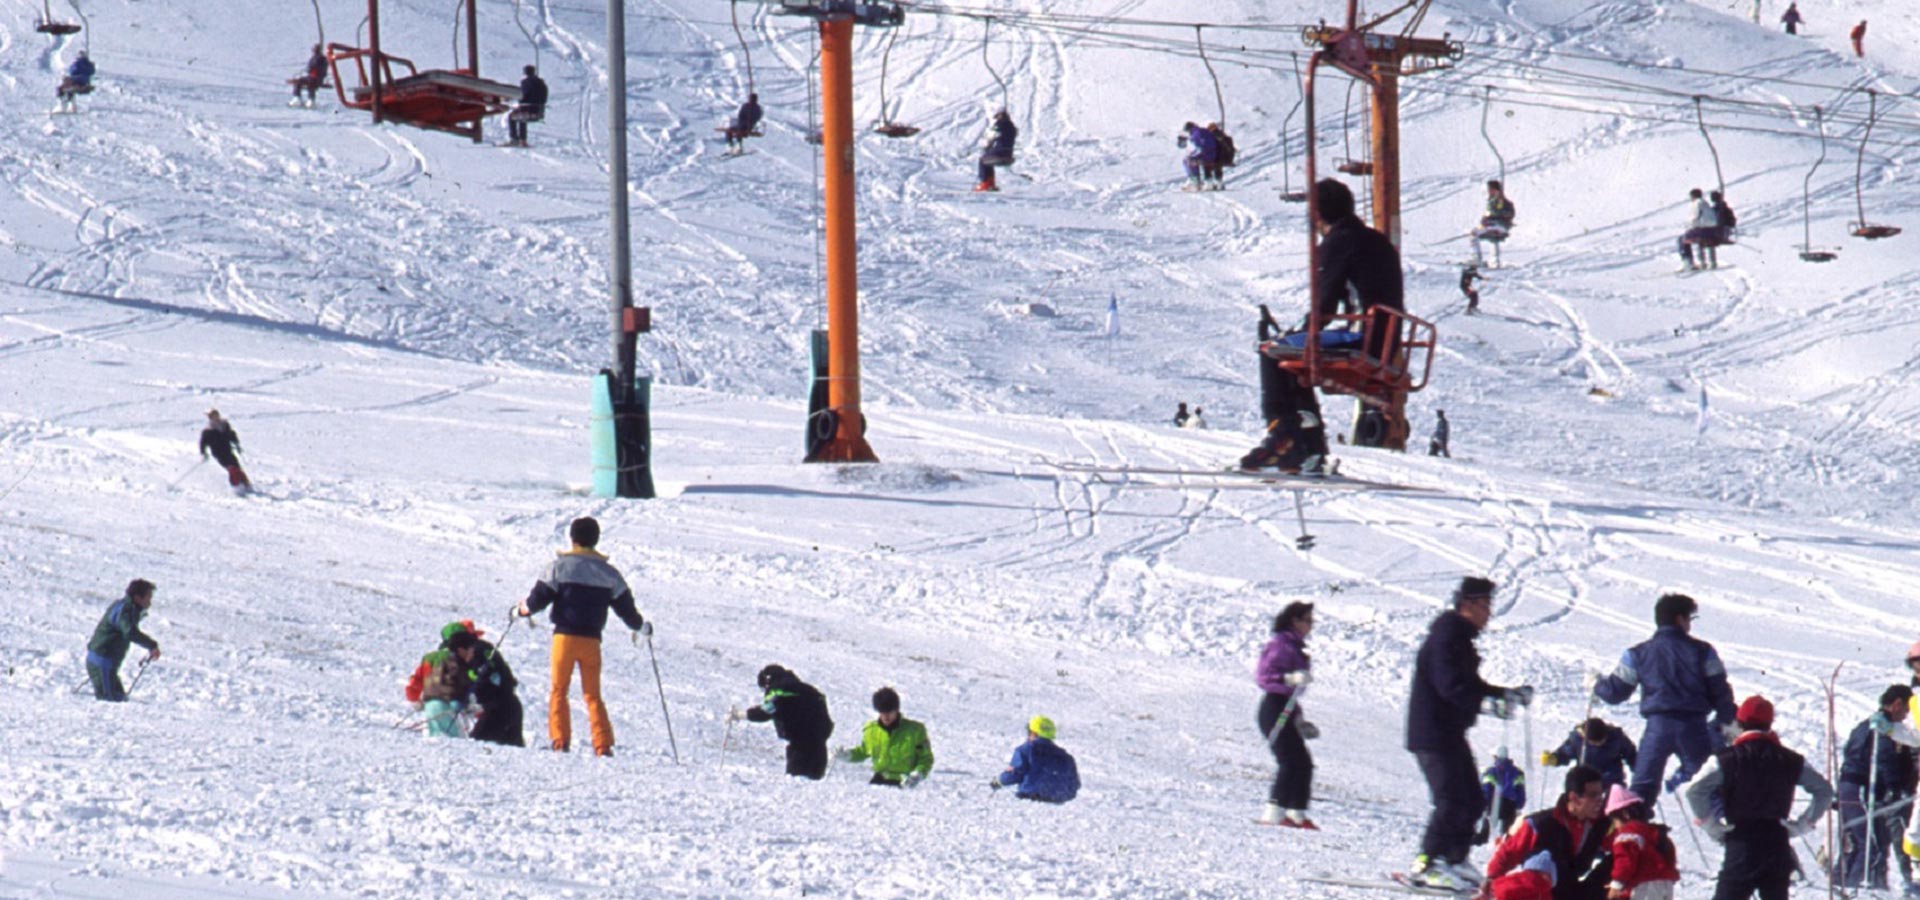 Ski slopes in northern Hiroshima prefecture